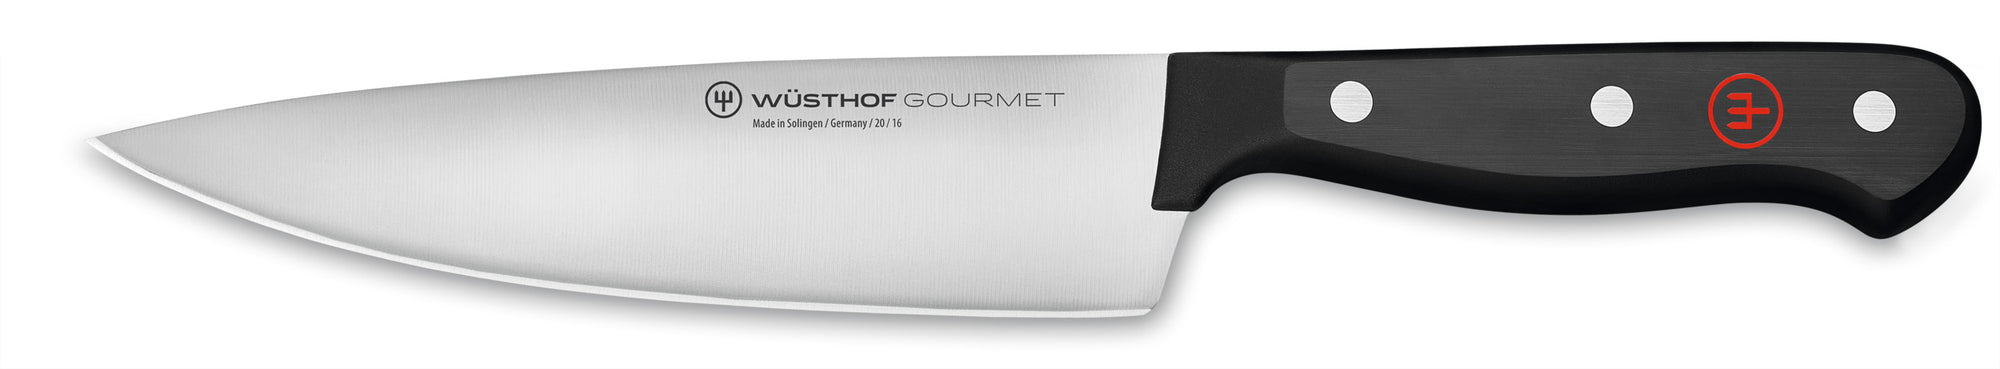 Wusthof Gourmet Cook's Knife, 6-inch (16 cm) - 4562-16 Canada